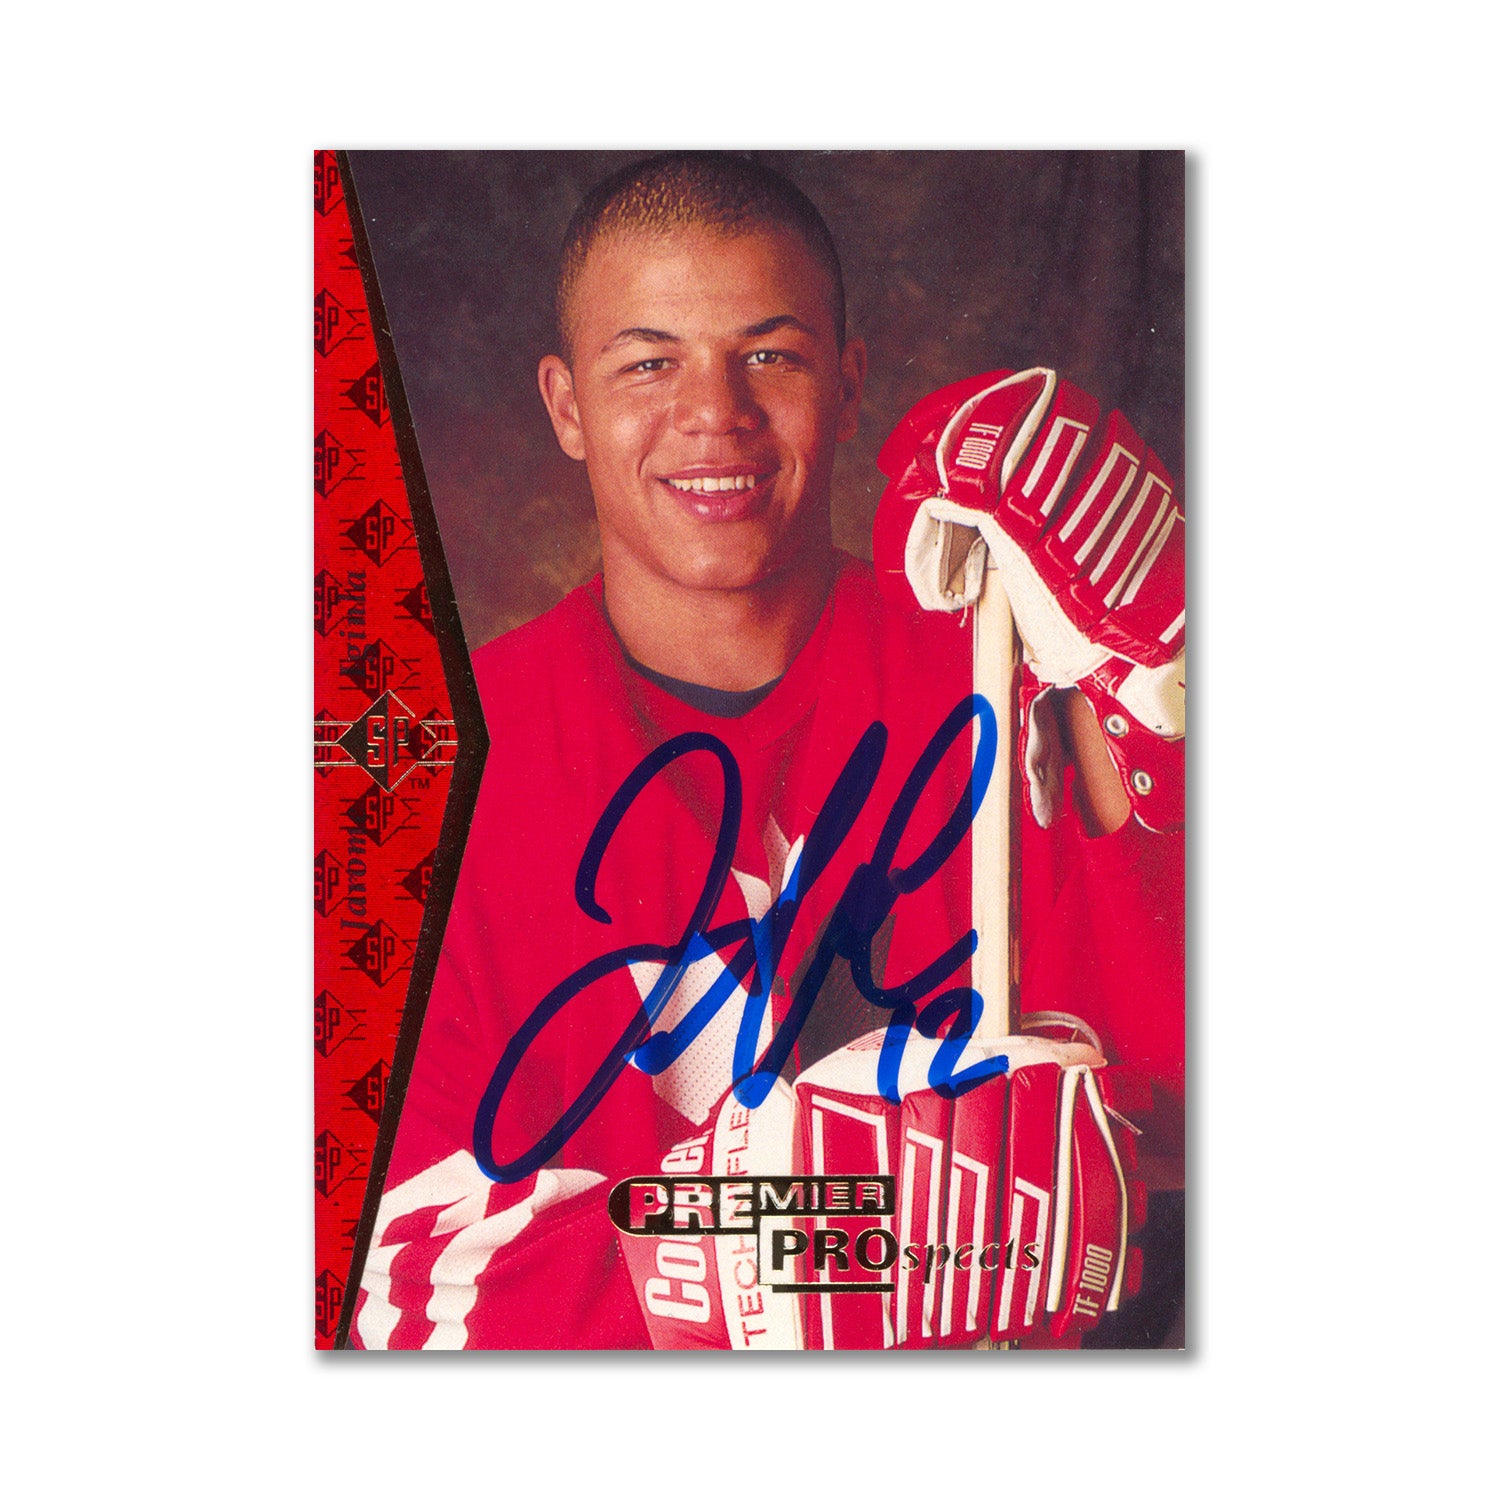 Autographed 1994-95 Upper Deck SP #181 Jarome Iginla Rookie Card